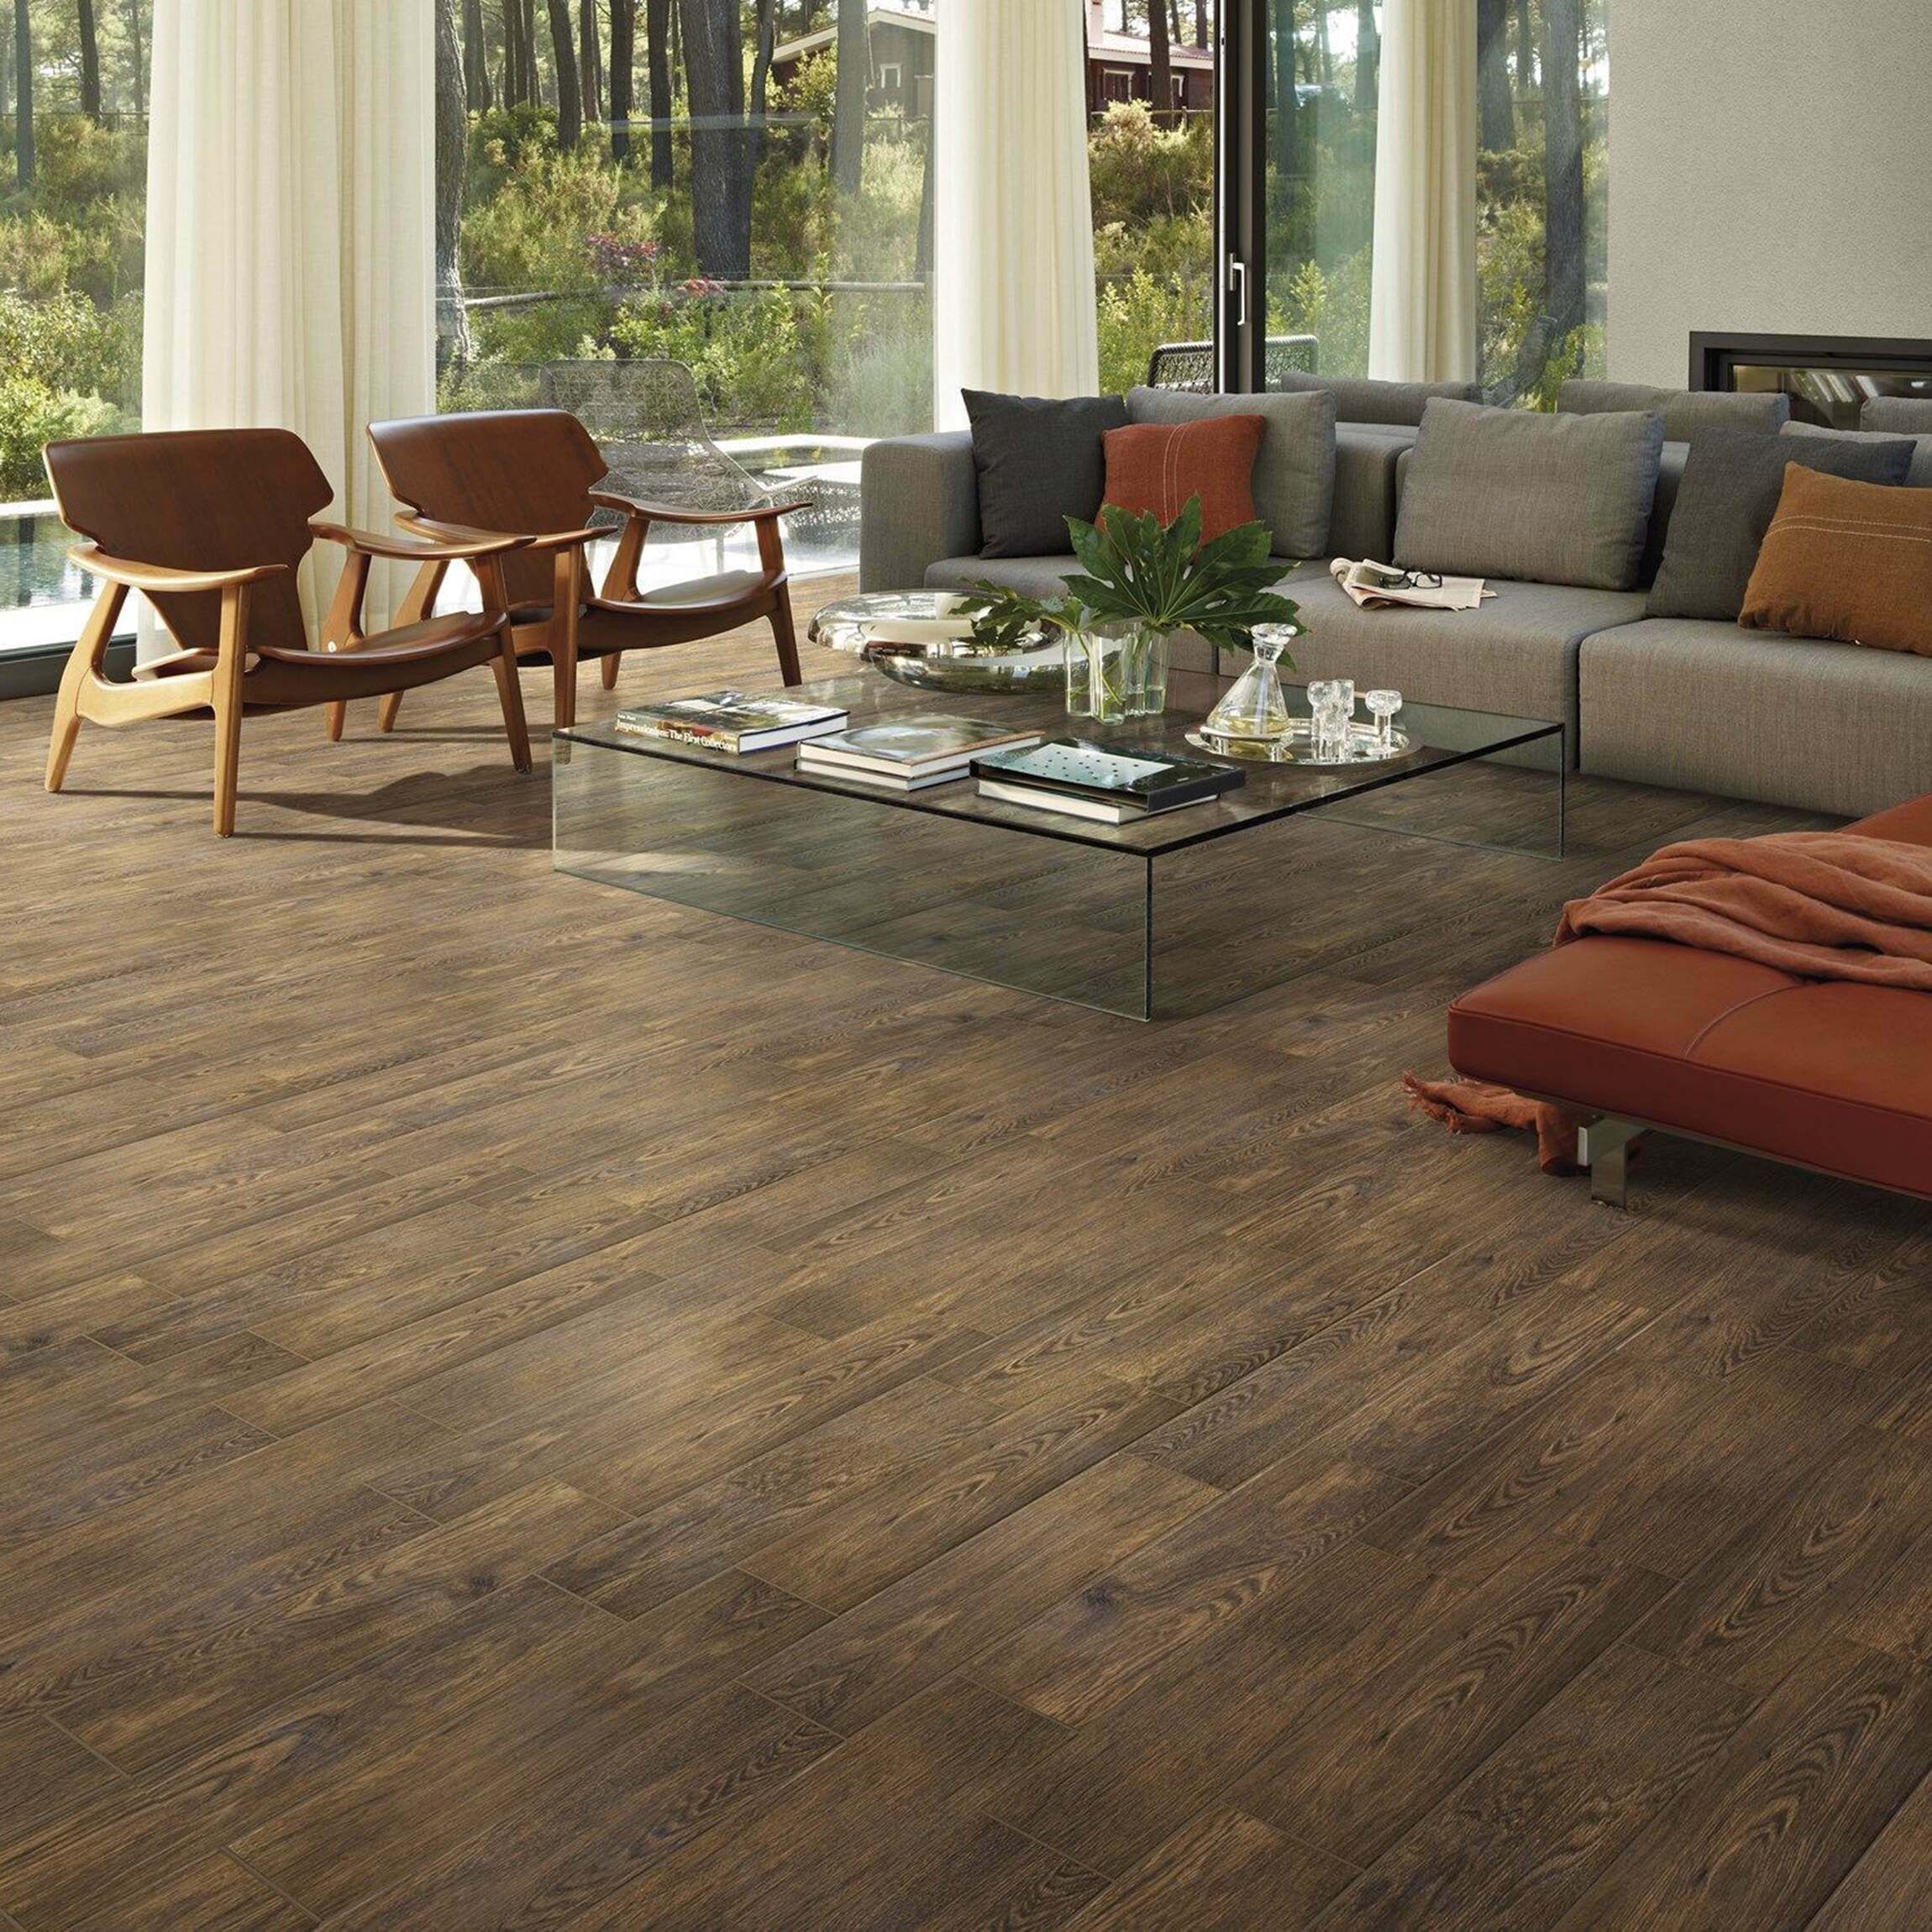 Floor Tiles From Tile Mountain, Grey Wood Tile Floor Living Room